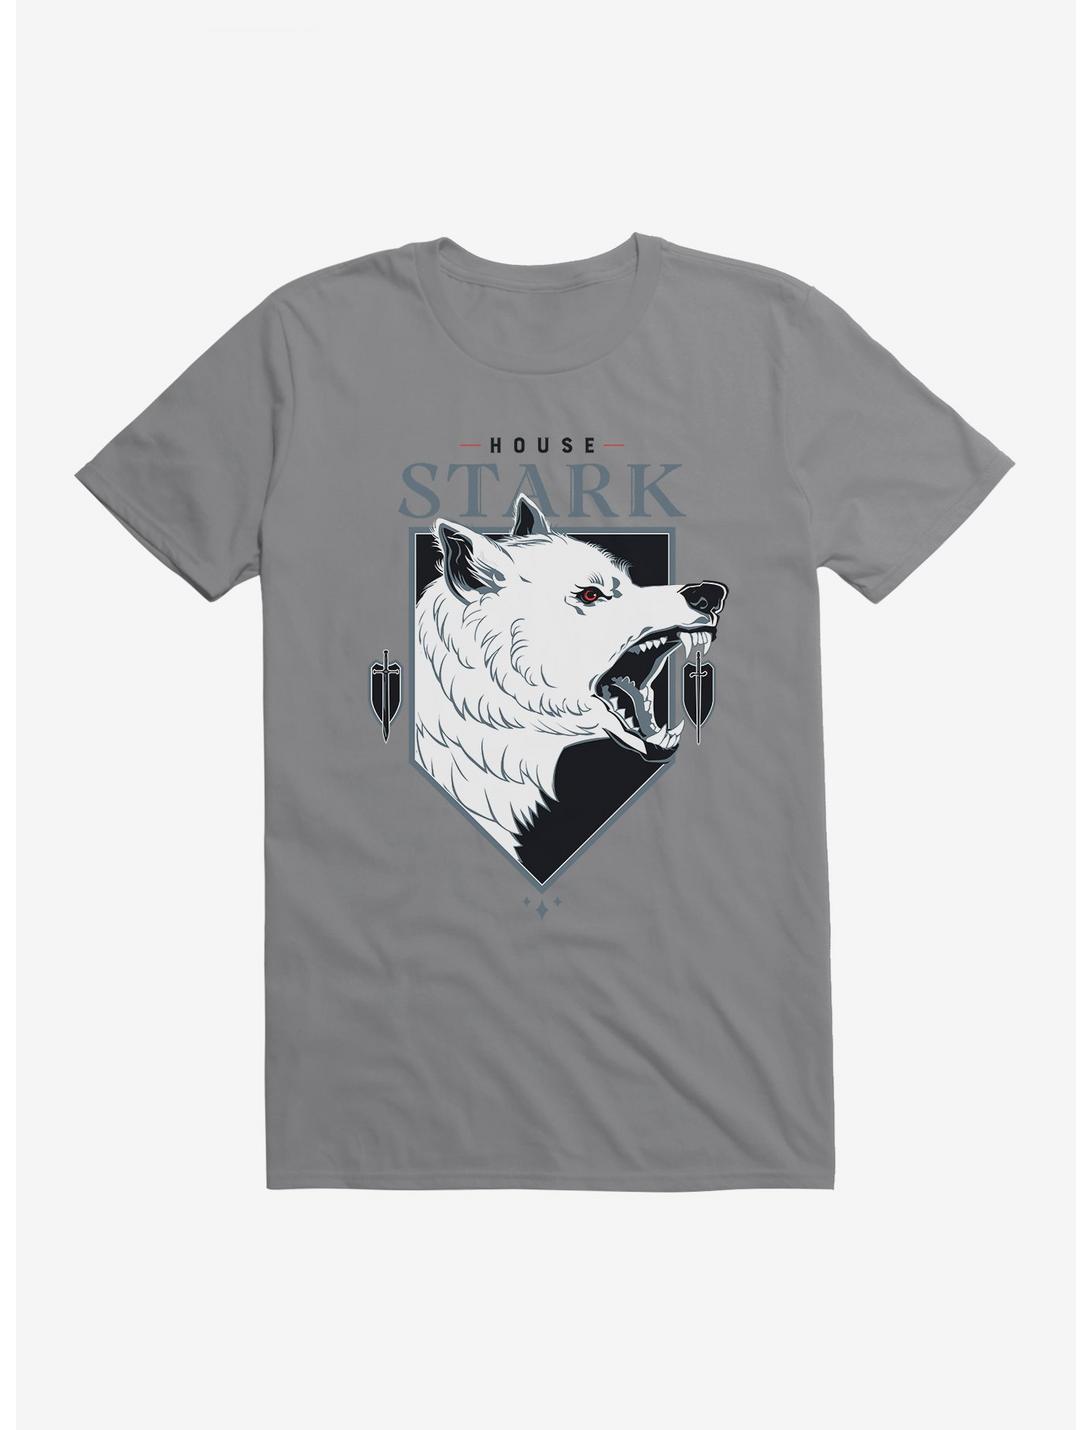 Game Of Thrones House Stark Direwolf T-Shirt, , hi-res